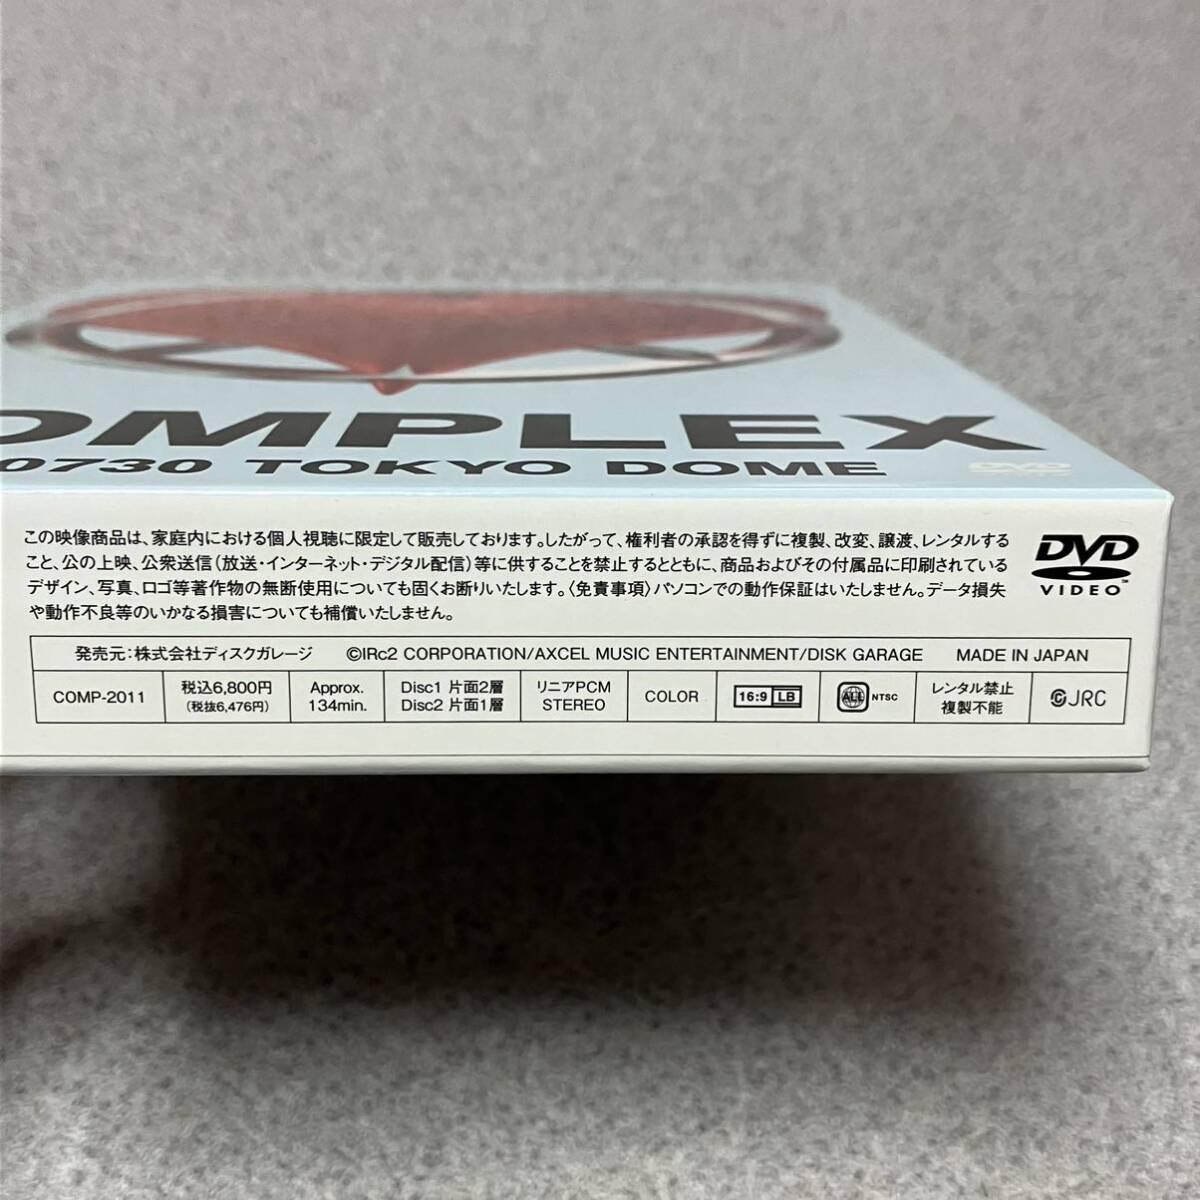 COMPLEX 20110730 TOKYO DOME DVD 日本一心 コンプレックス 吉川晃司 布袋寅泰の画像3